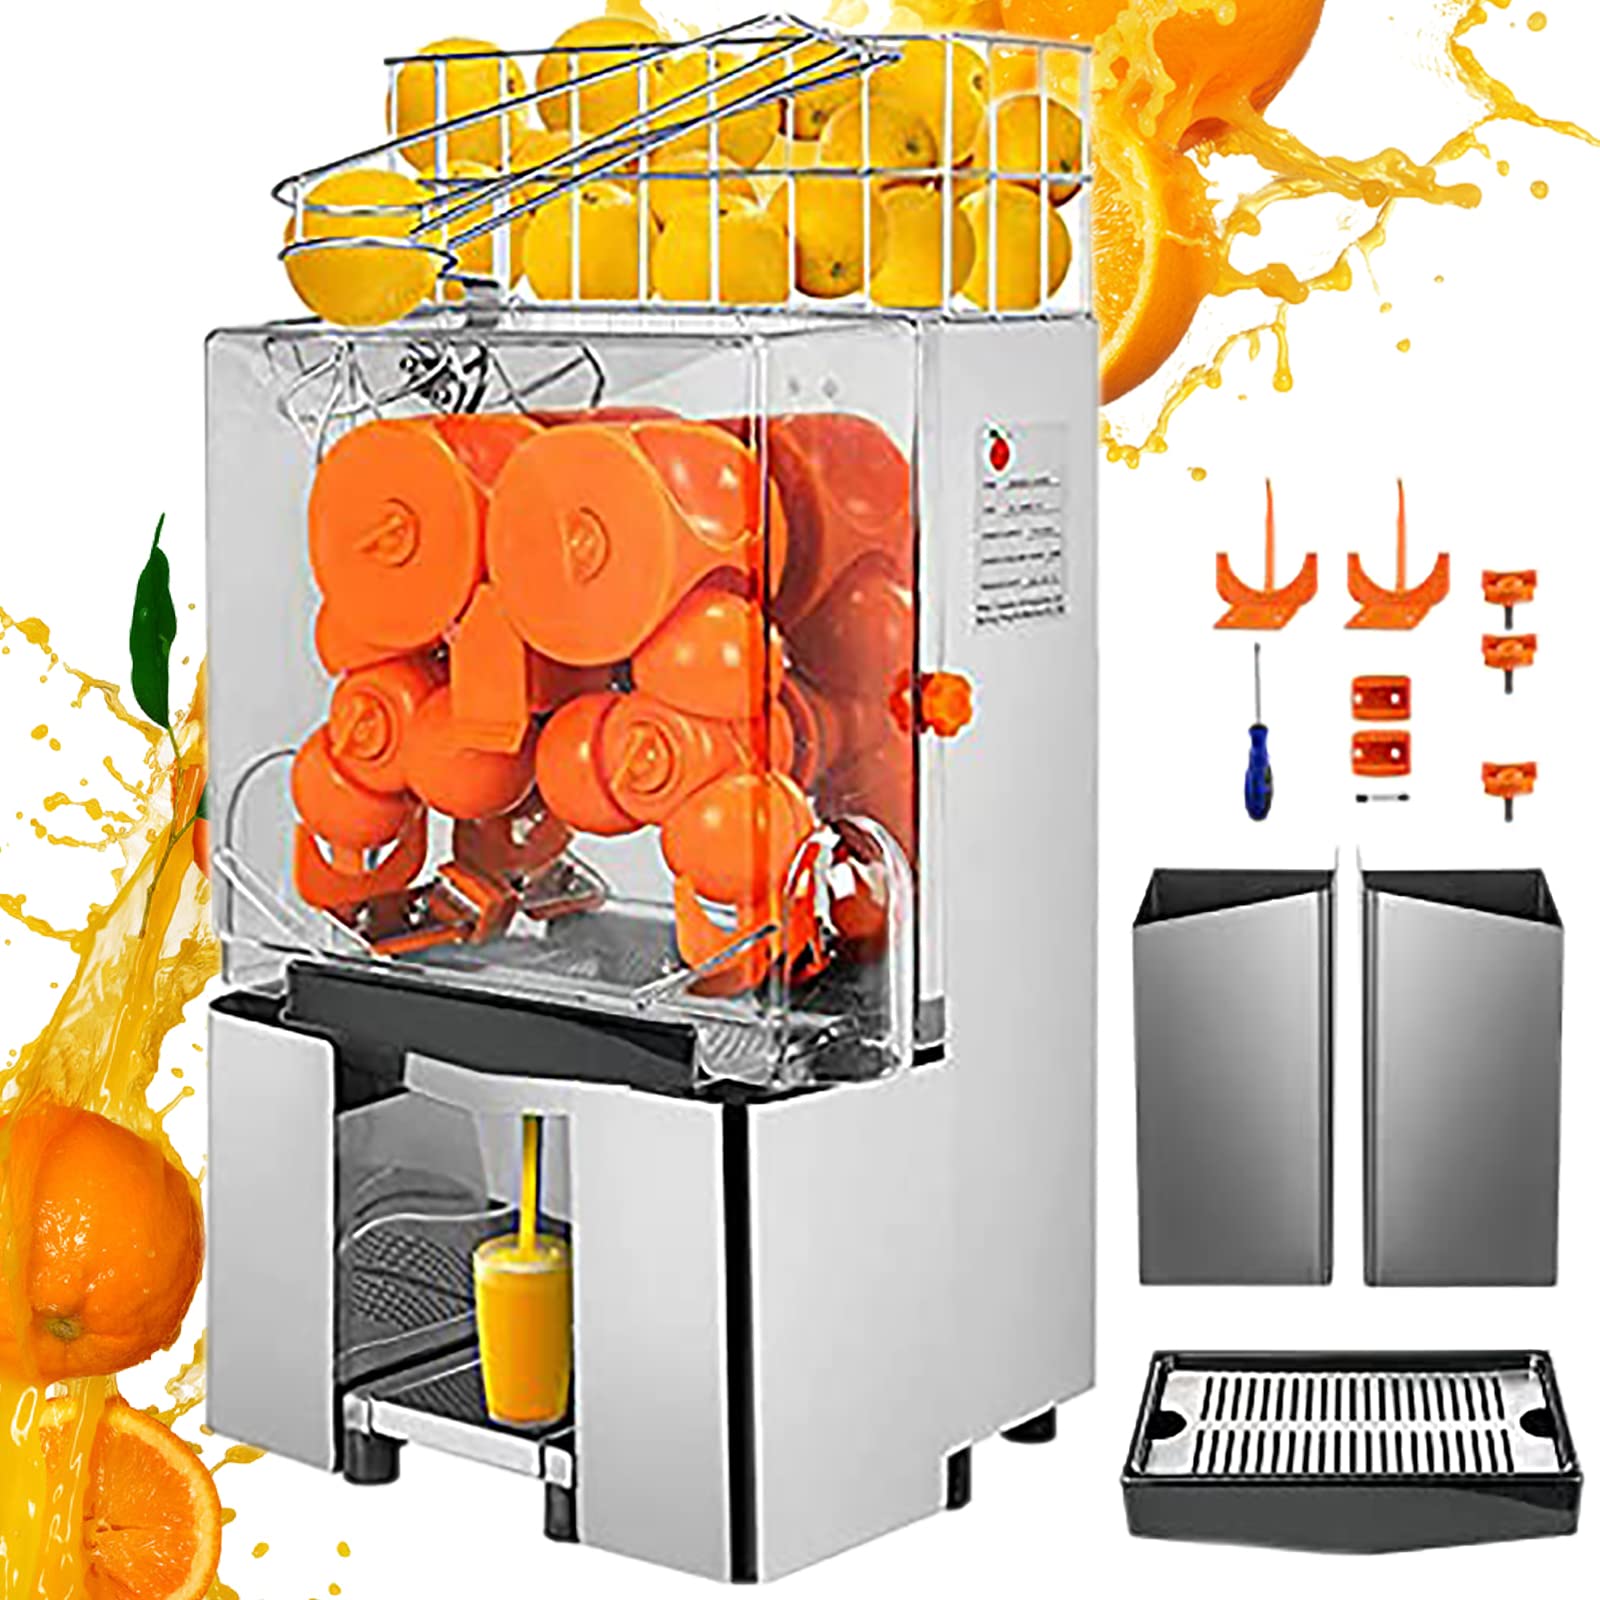 MMC500C Commercial Juicer, Fruit & Citrus Juicers, Centrifugal Juicers